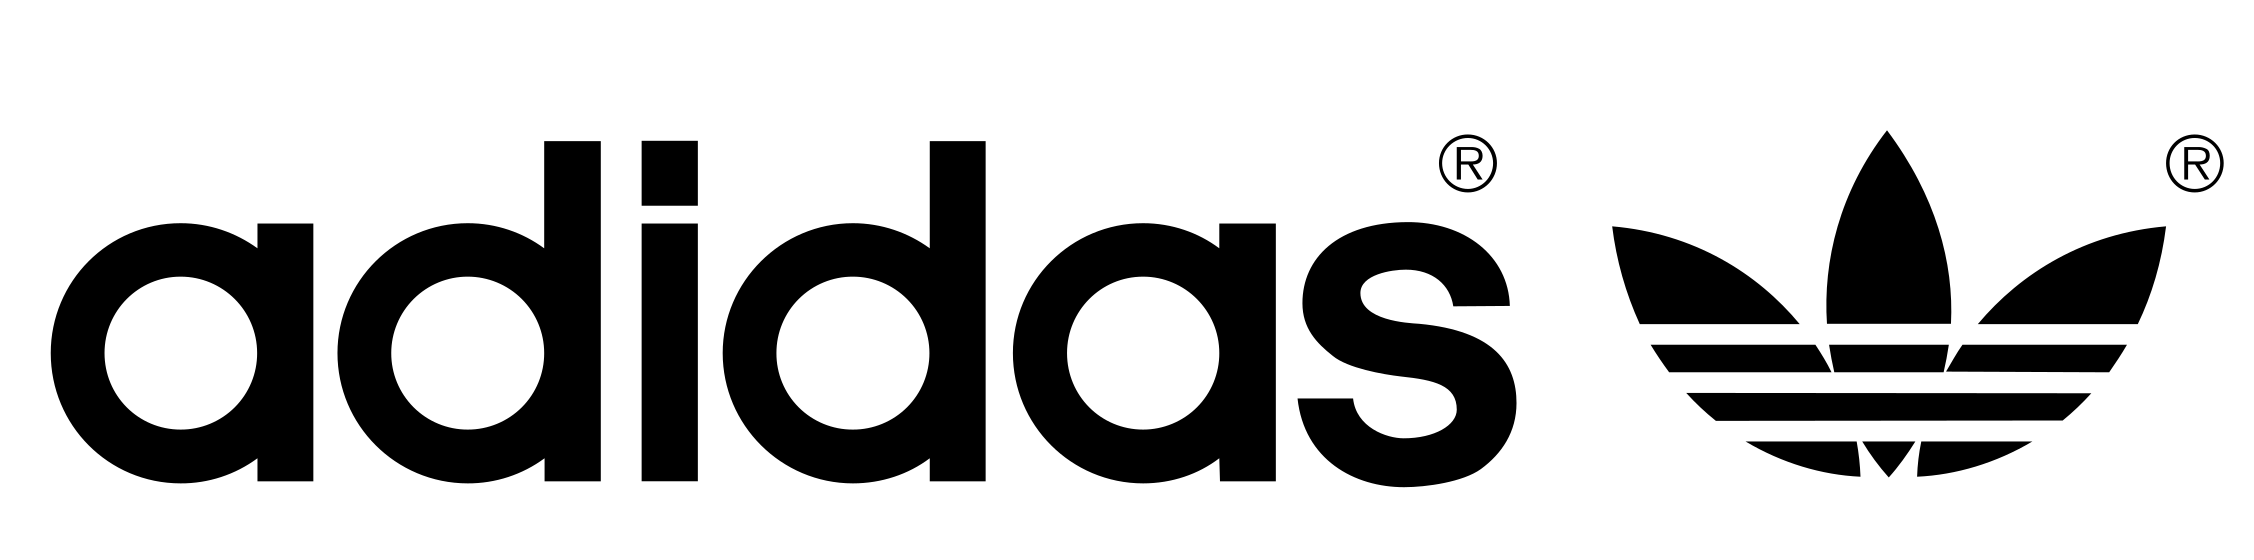 Adidas logo zwart PNG Transparant Beeld